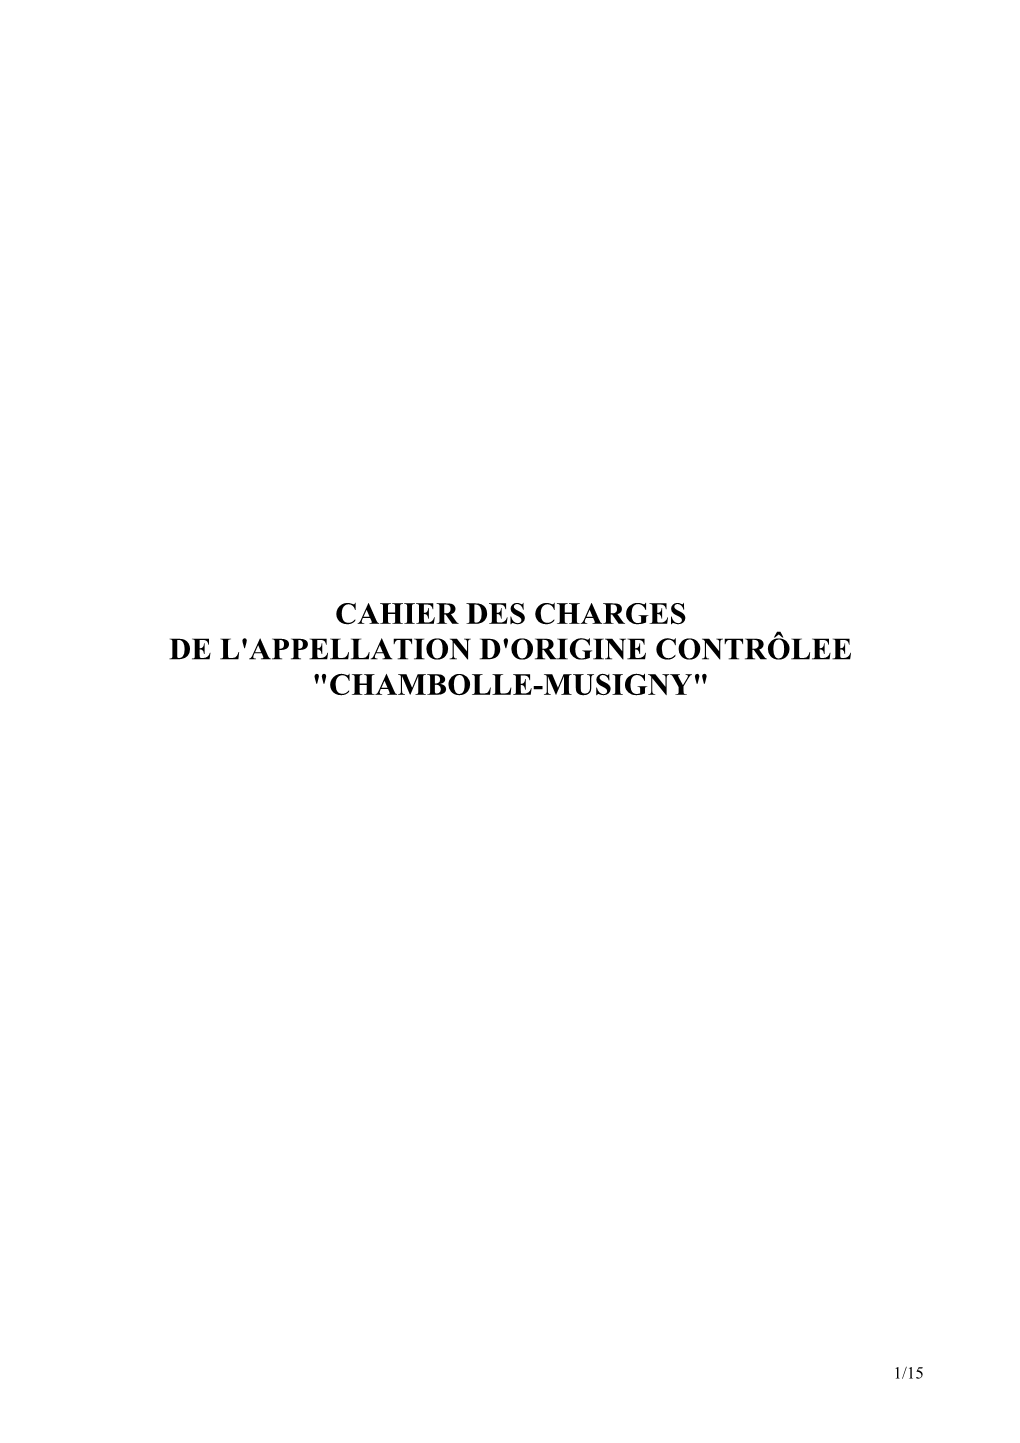 CDC CHAMBOLLE-MUSIGNY Homologation 23-10-09